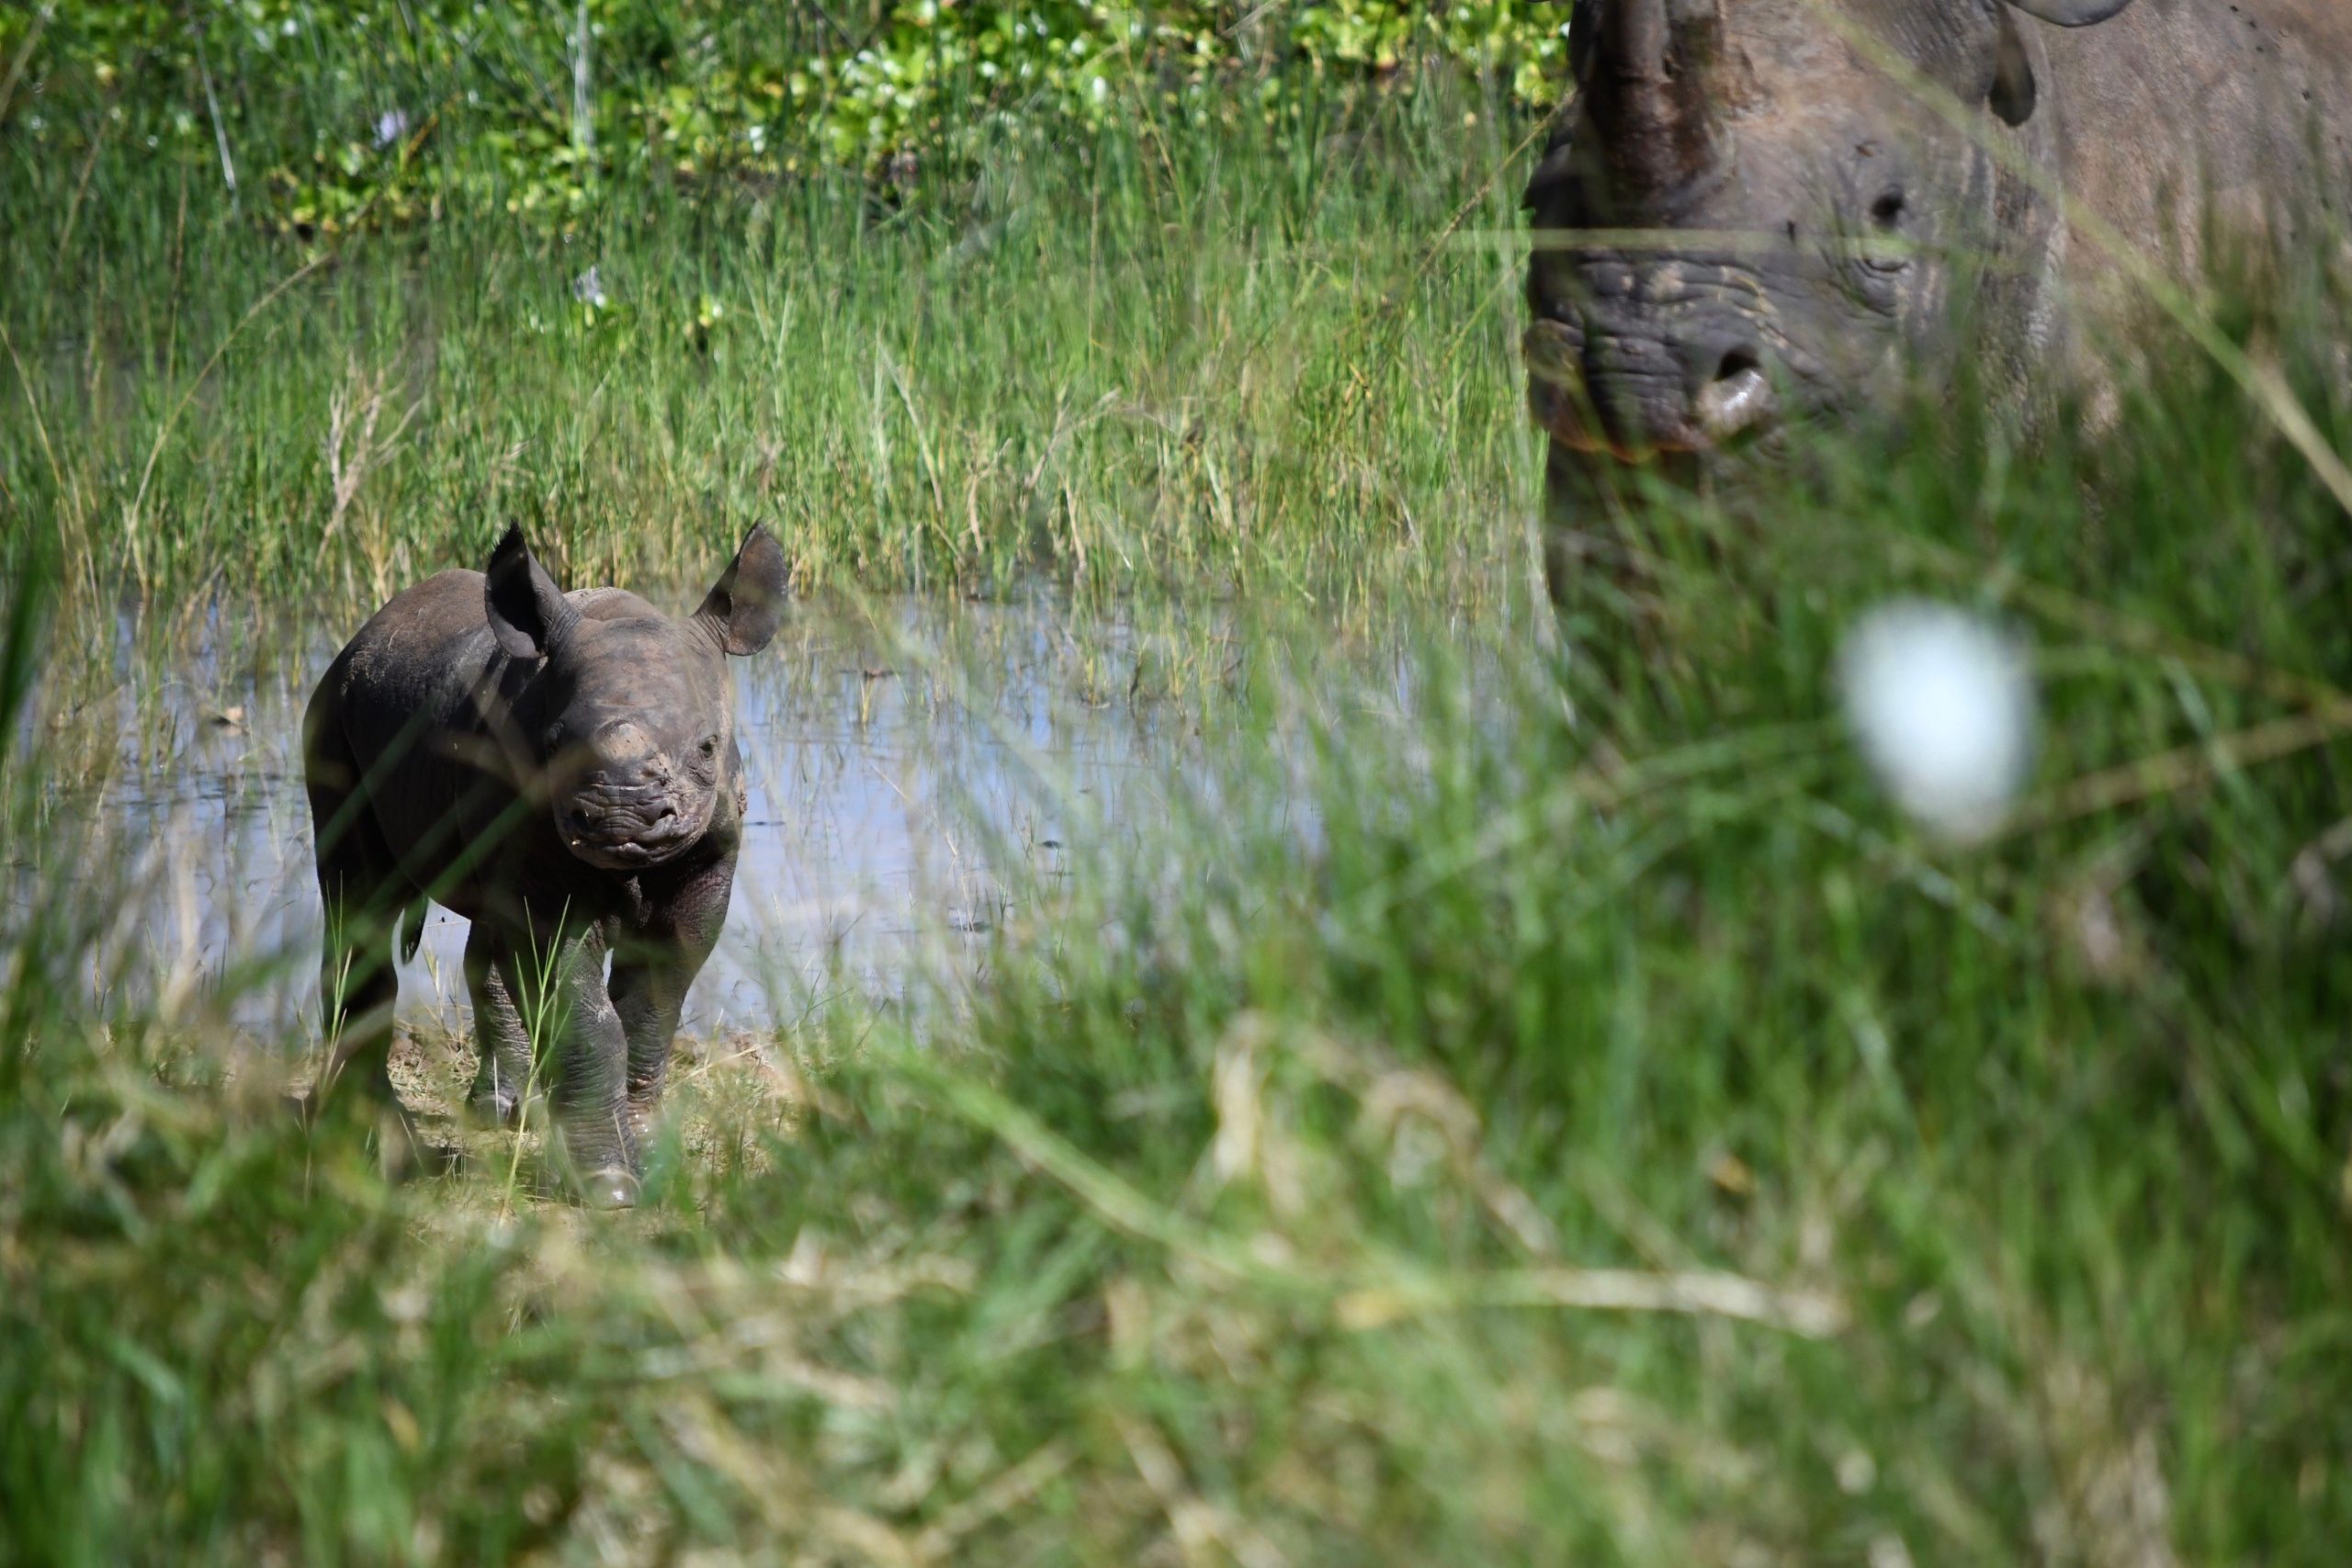 Black Rhino calf born to parents who were bred in captivity